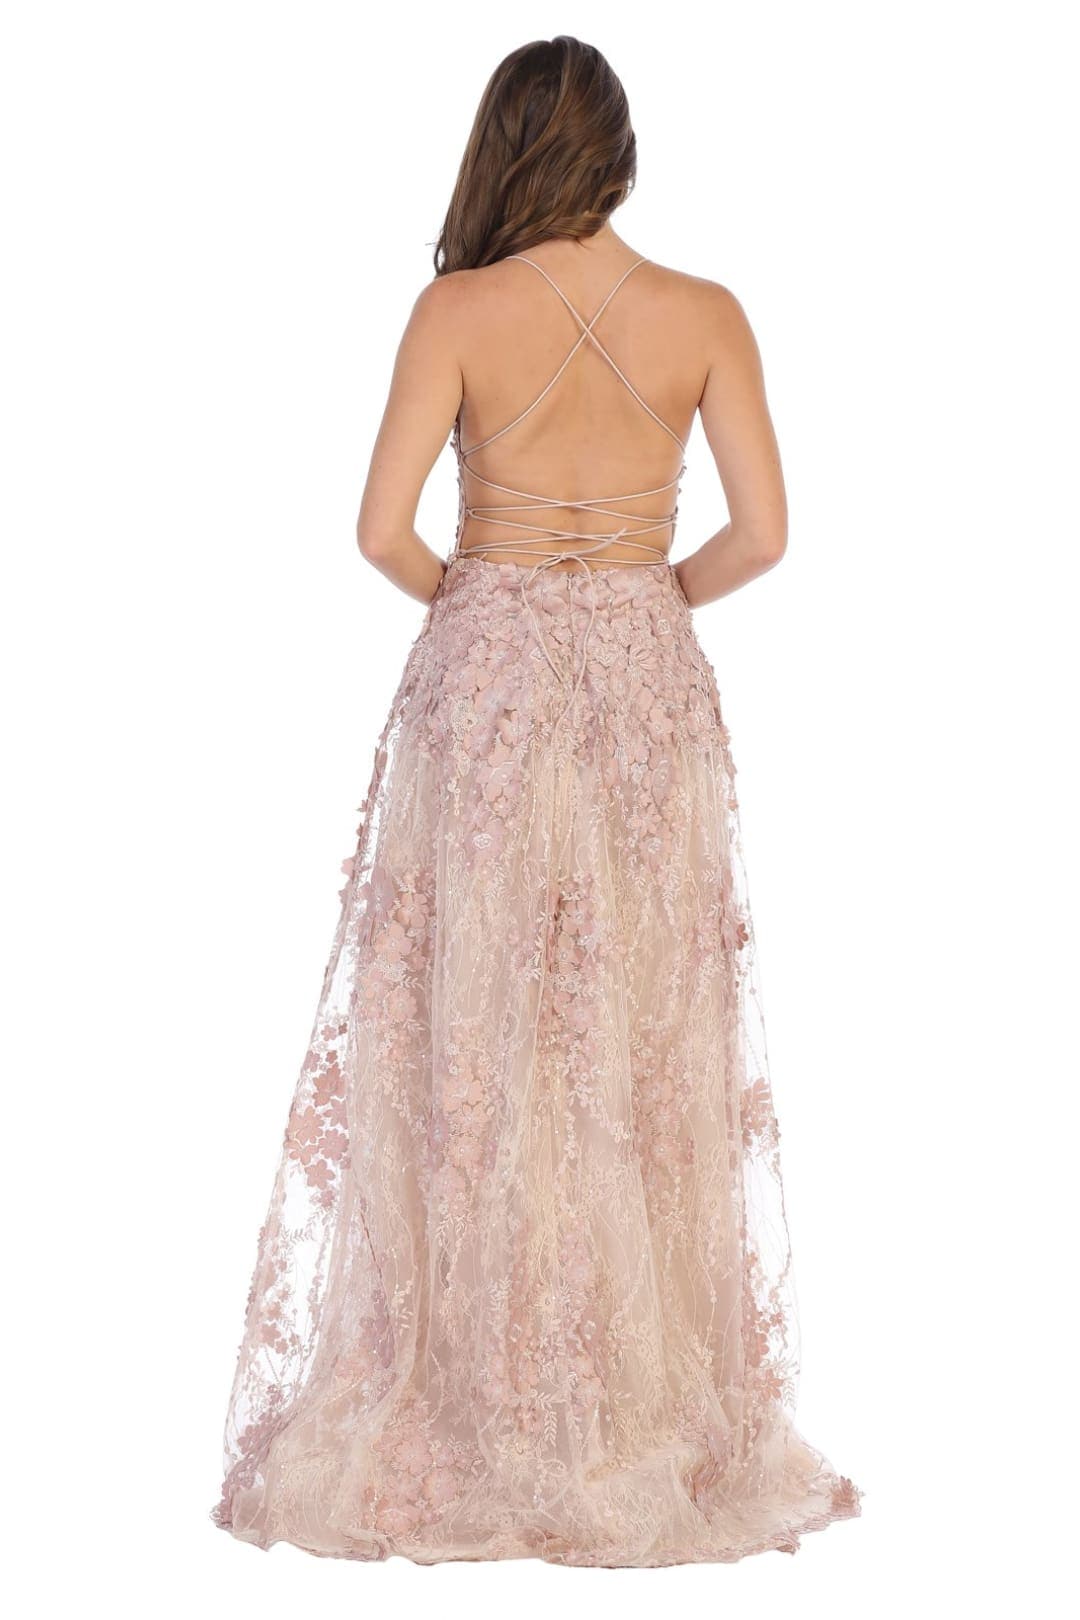 Thigh High Slit Prom Dress